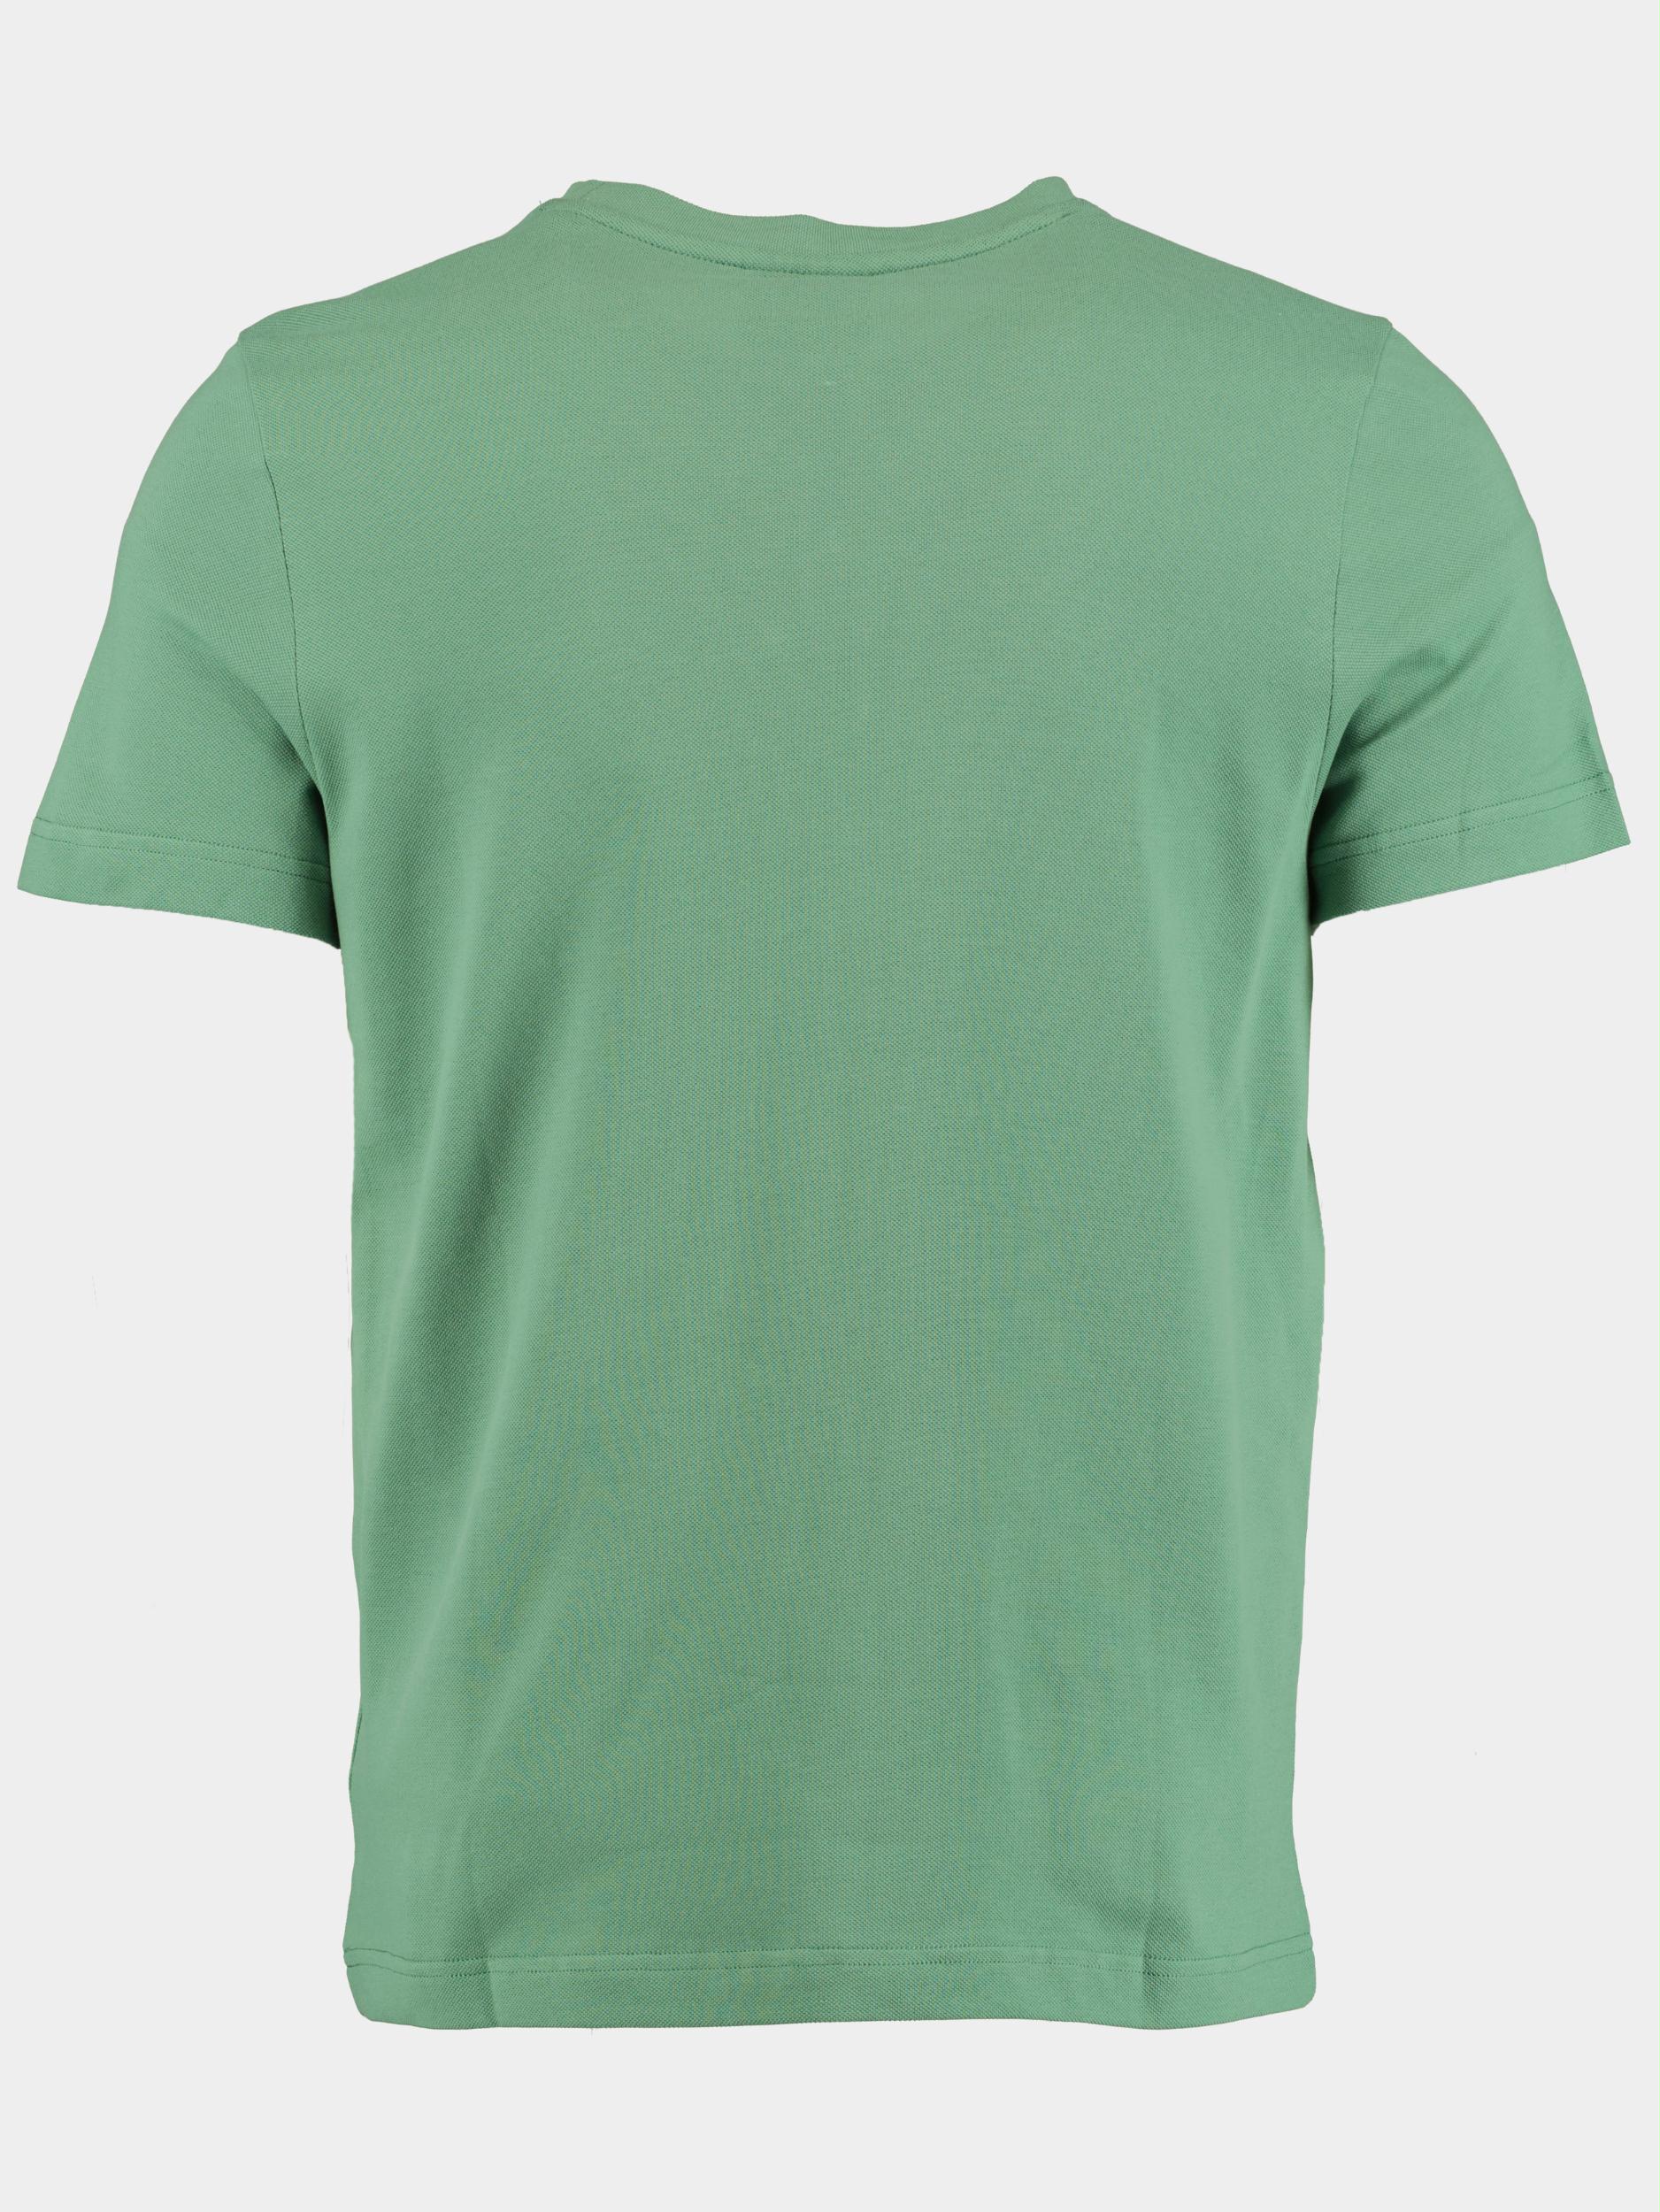 Bos Bright Blue T-shirt korte mouw Groen Cooper T-shirt Pique 23108CO54BO/903 modern green